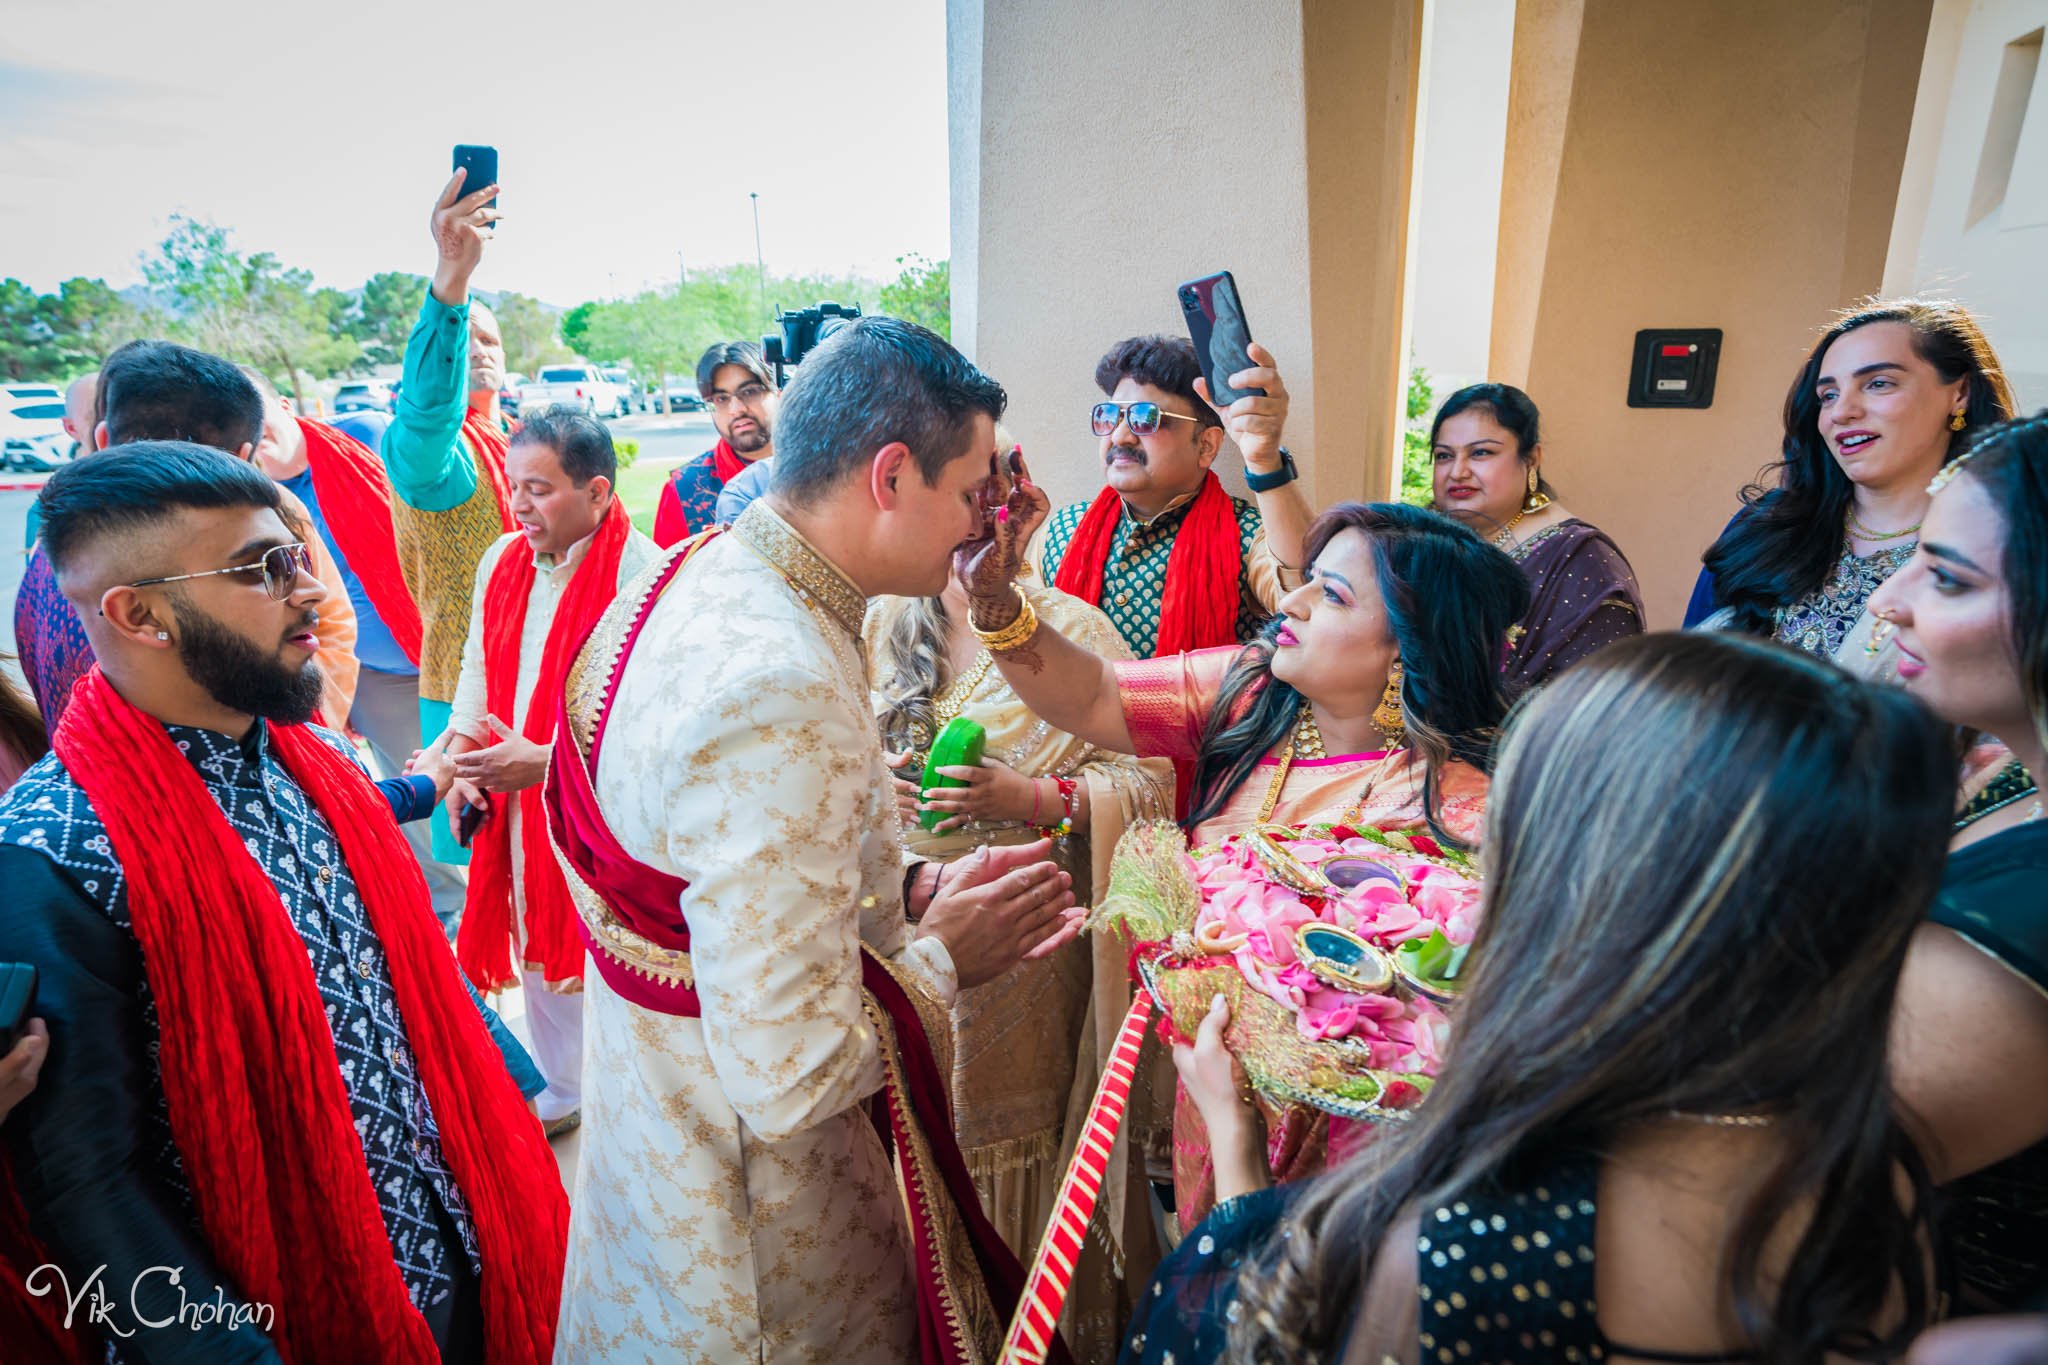 2022-06-09-Annie-&-Steven-Las-Vegas-Indian-Wedding-Ceremony-Photography-Vik-Chohan-Photography-Photo-Booth-Social-Media-VCP-050.jpg